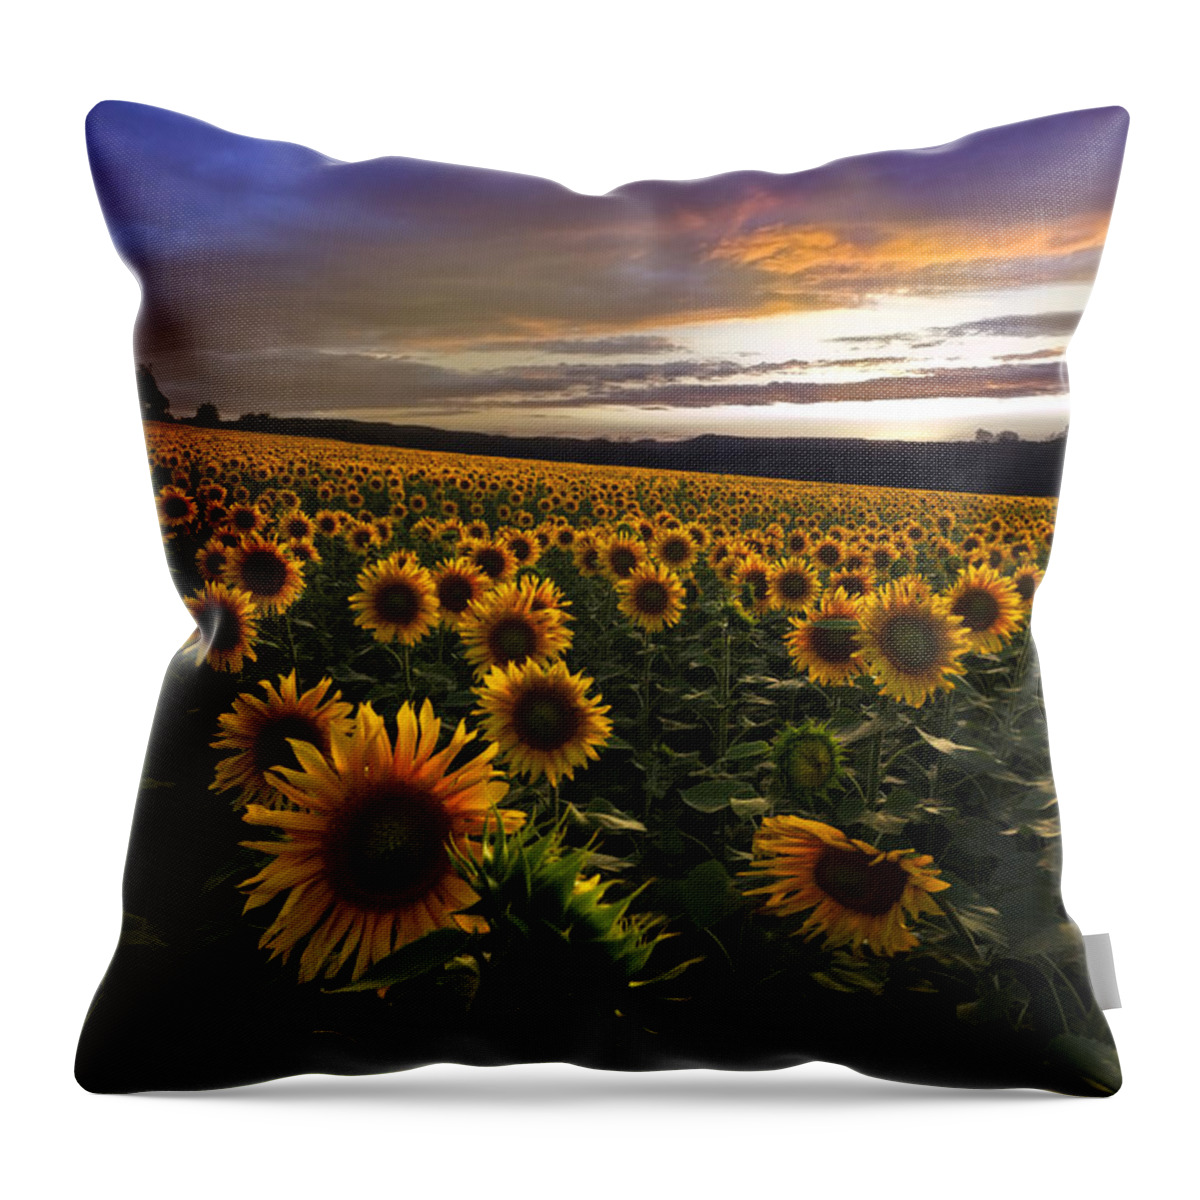 Austria Throw Pillow featuring the photograph Sunflower Sunset by Debra and Dave Vanderlaan